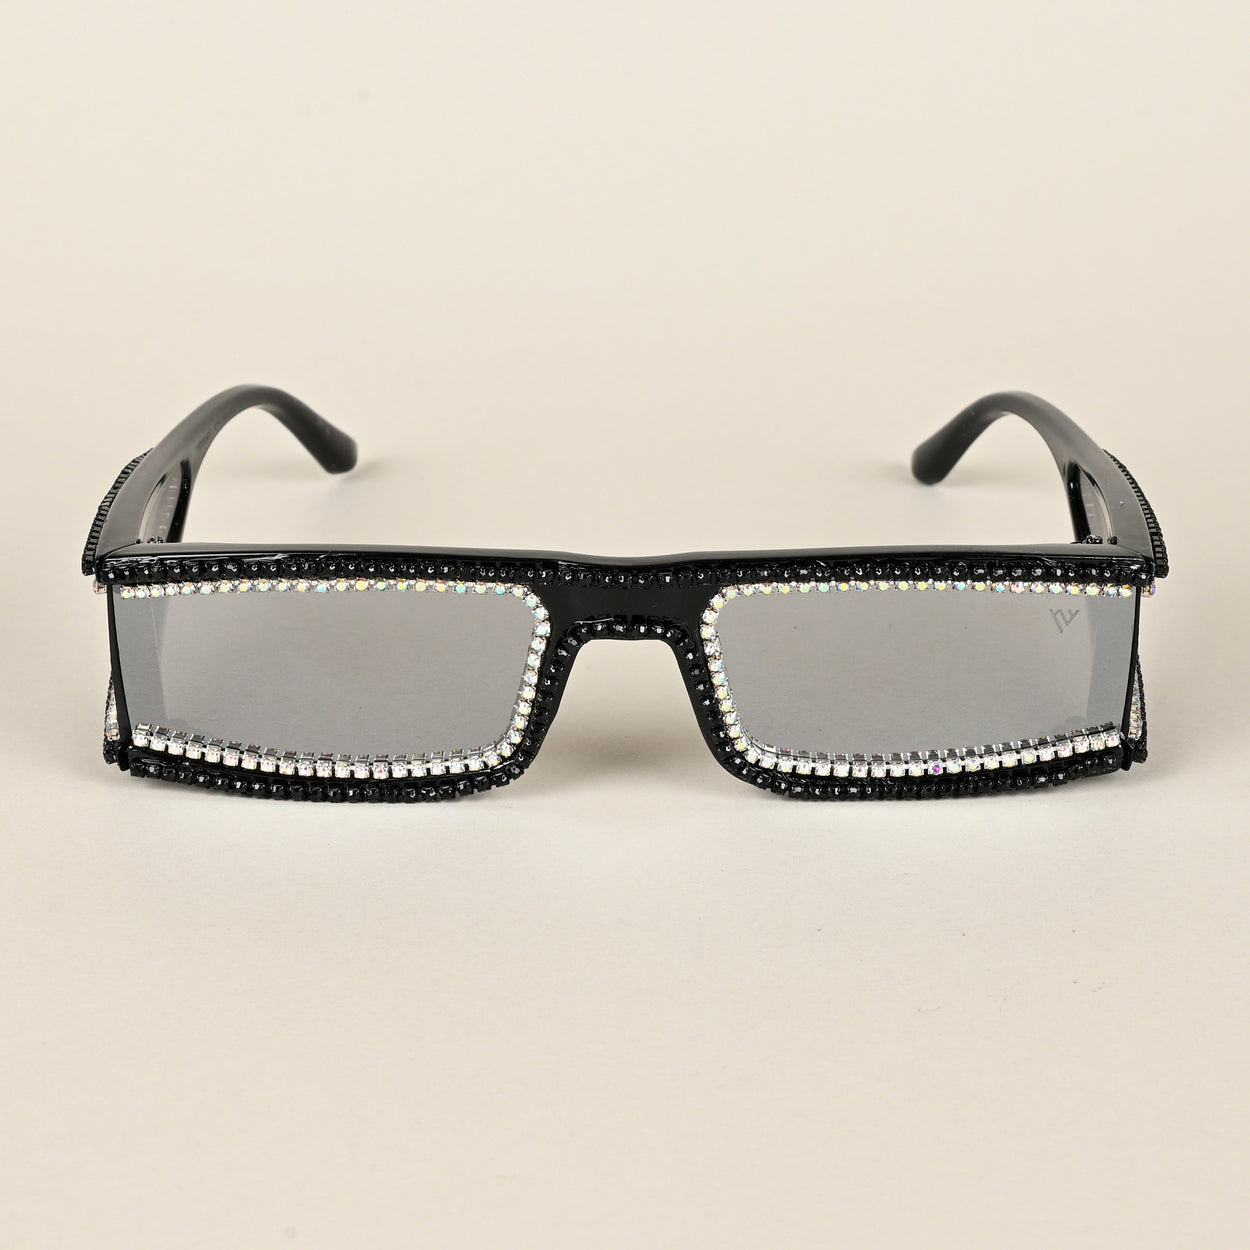 Voyage Grey Wayfarer Sunglasses for Men & Women (1935MG4350)